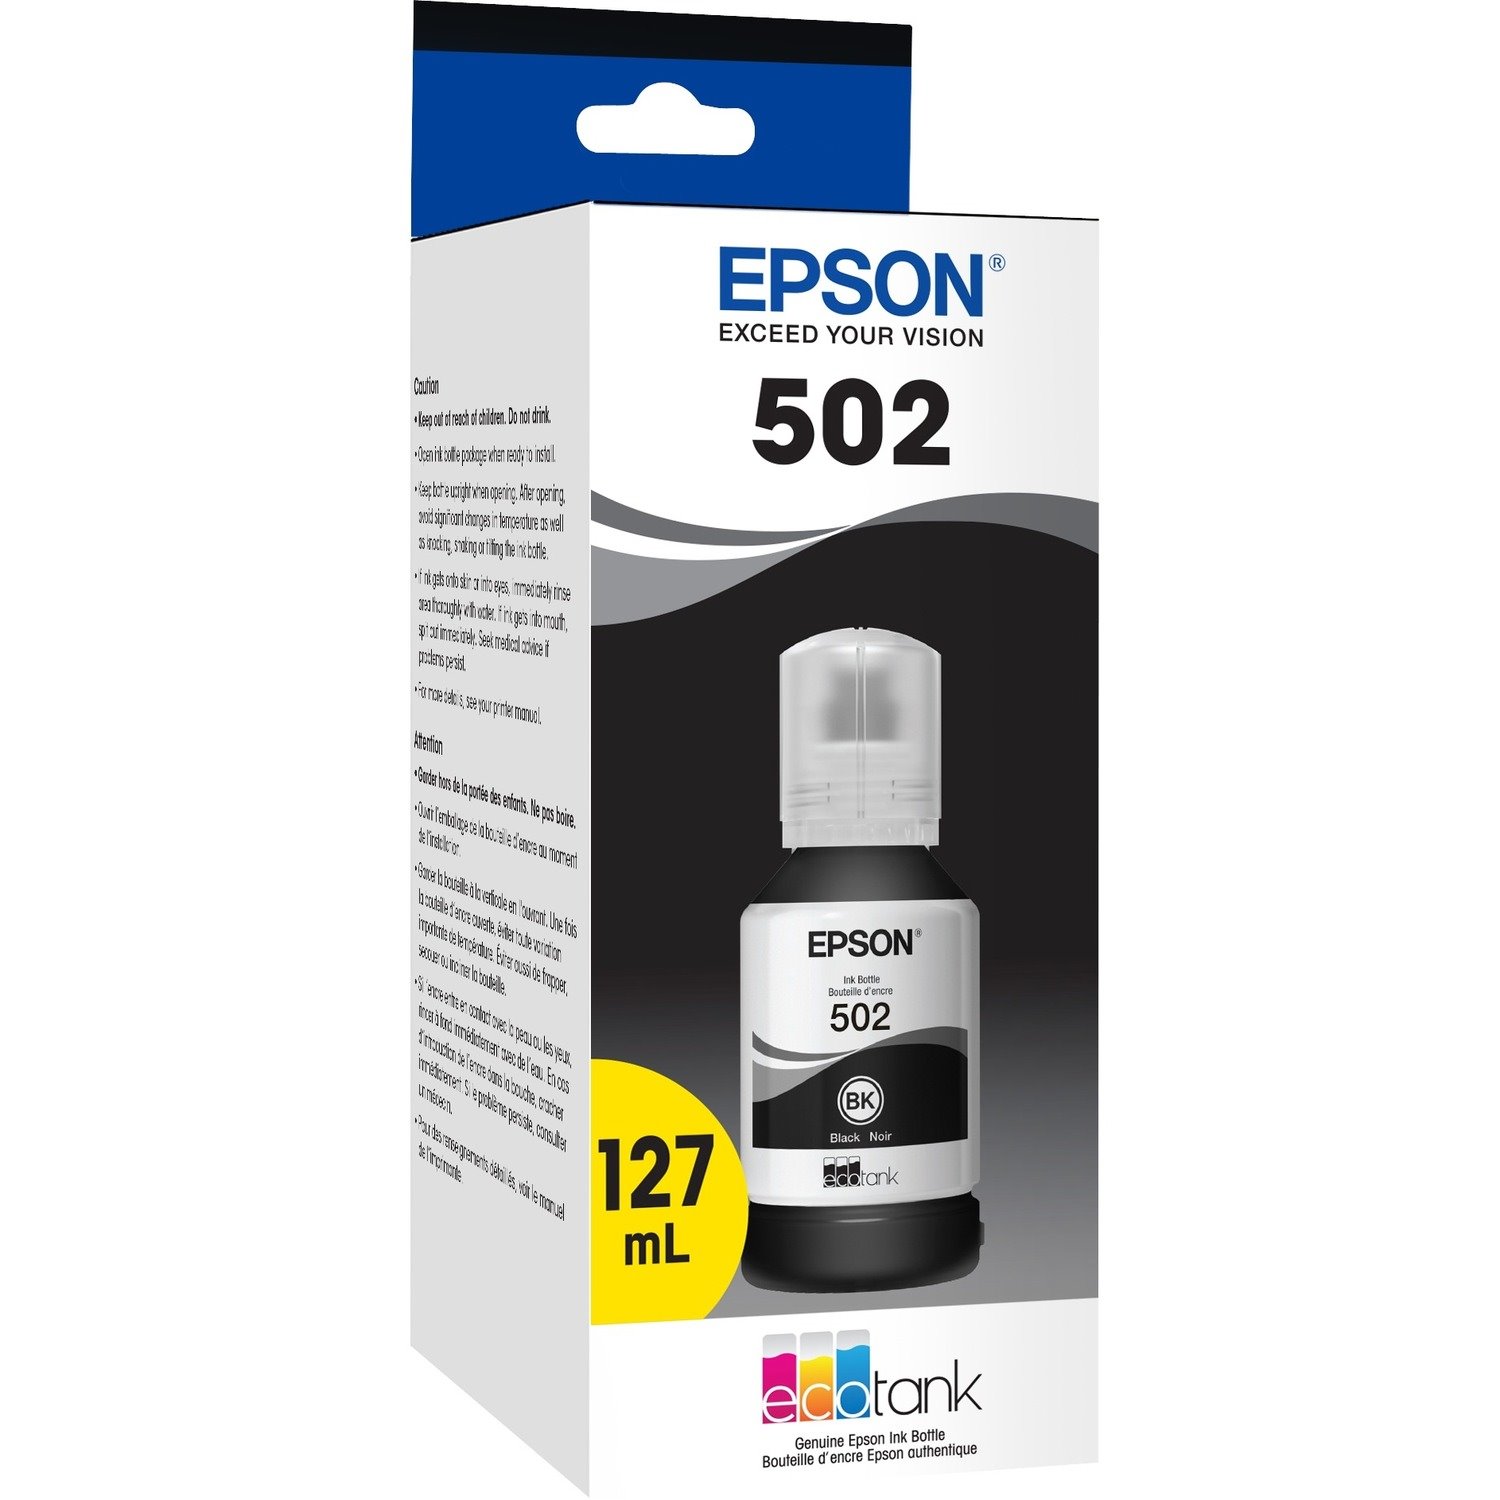 Epson T502, Black Ink Bottle